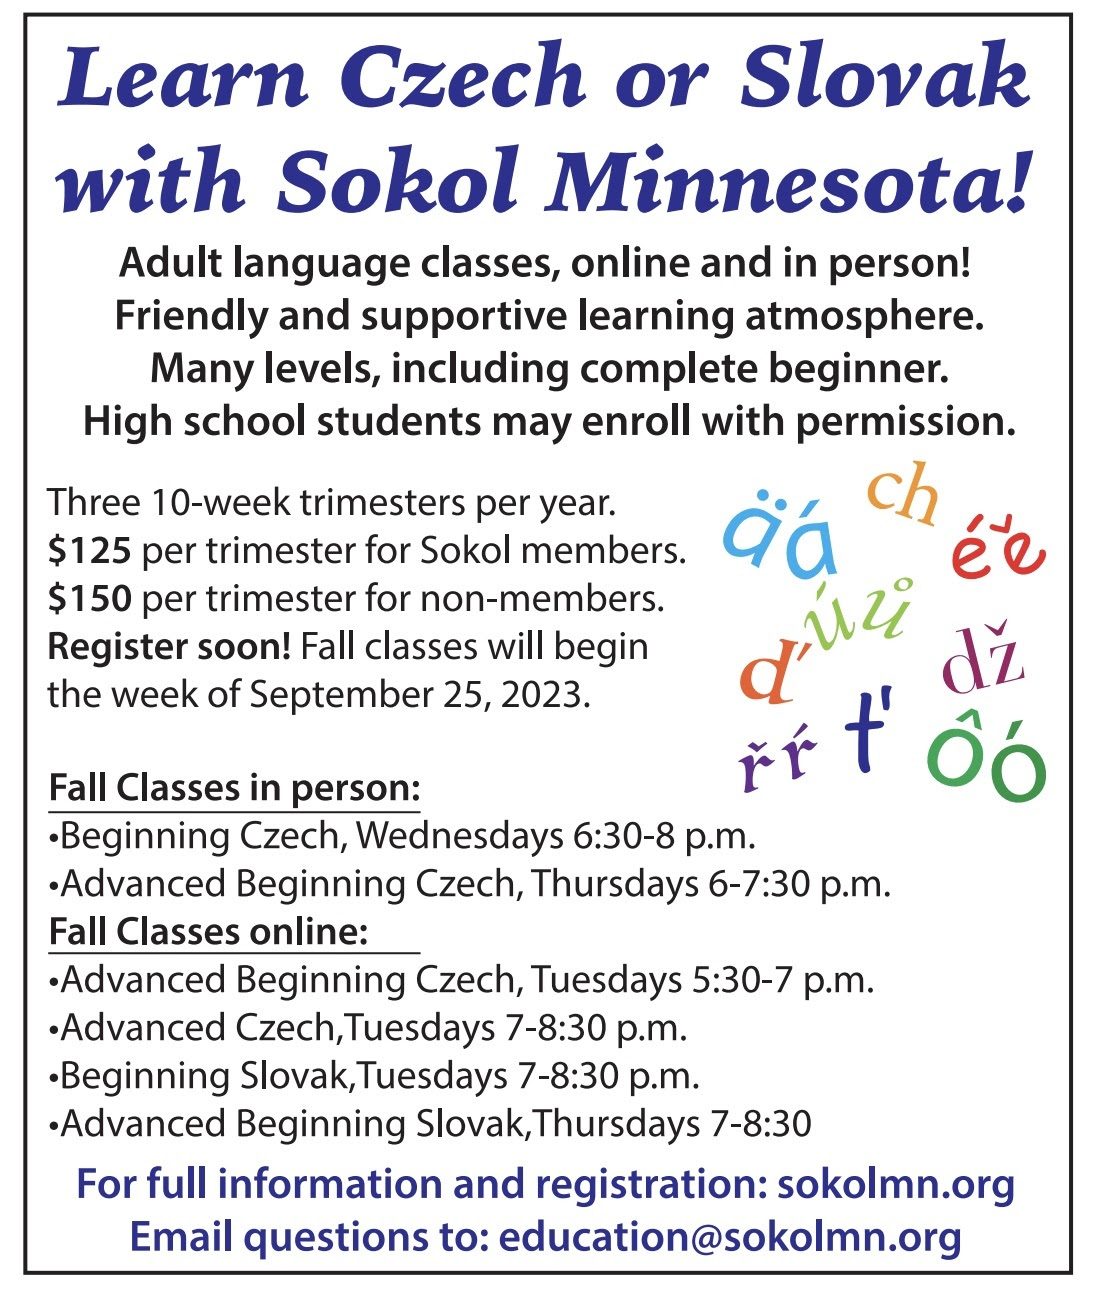 Learn Czech or Slovak with Sokol Minnesota! / Naute sa esky alebo slovensky so Sokolom Minnesota! 2023 Saint Paul